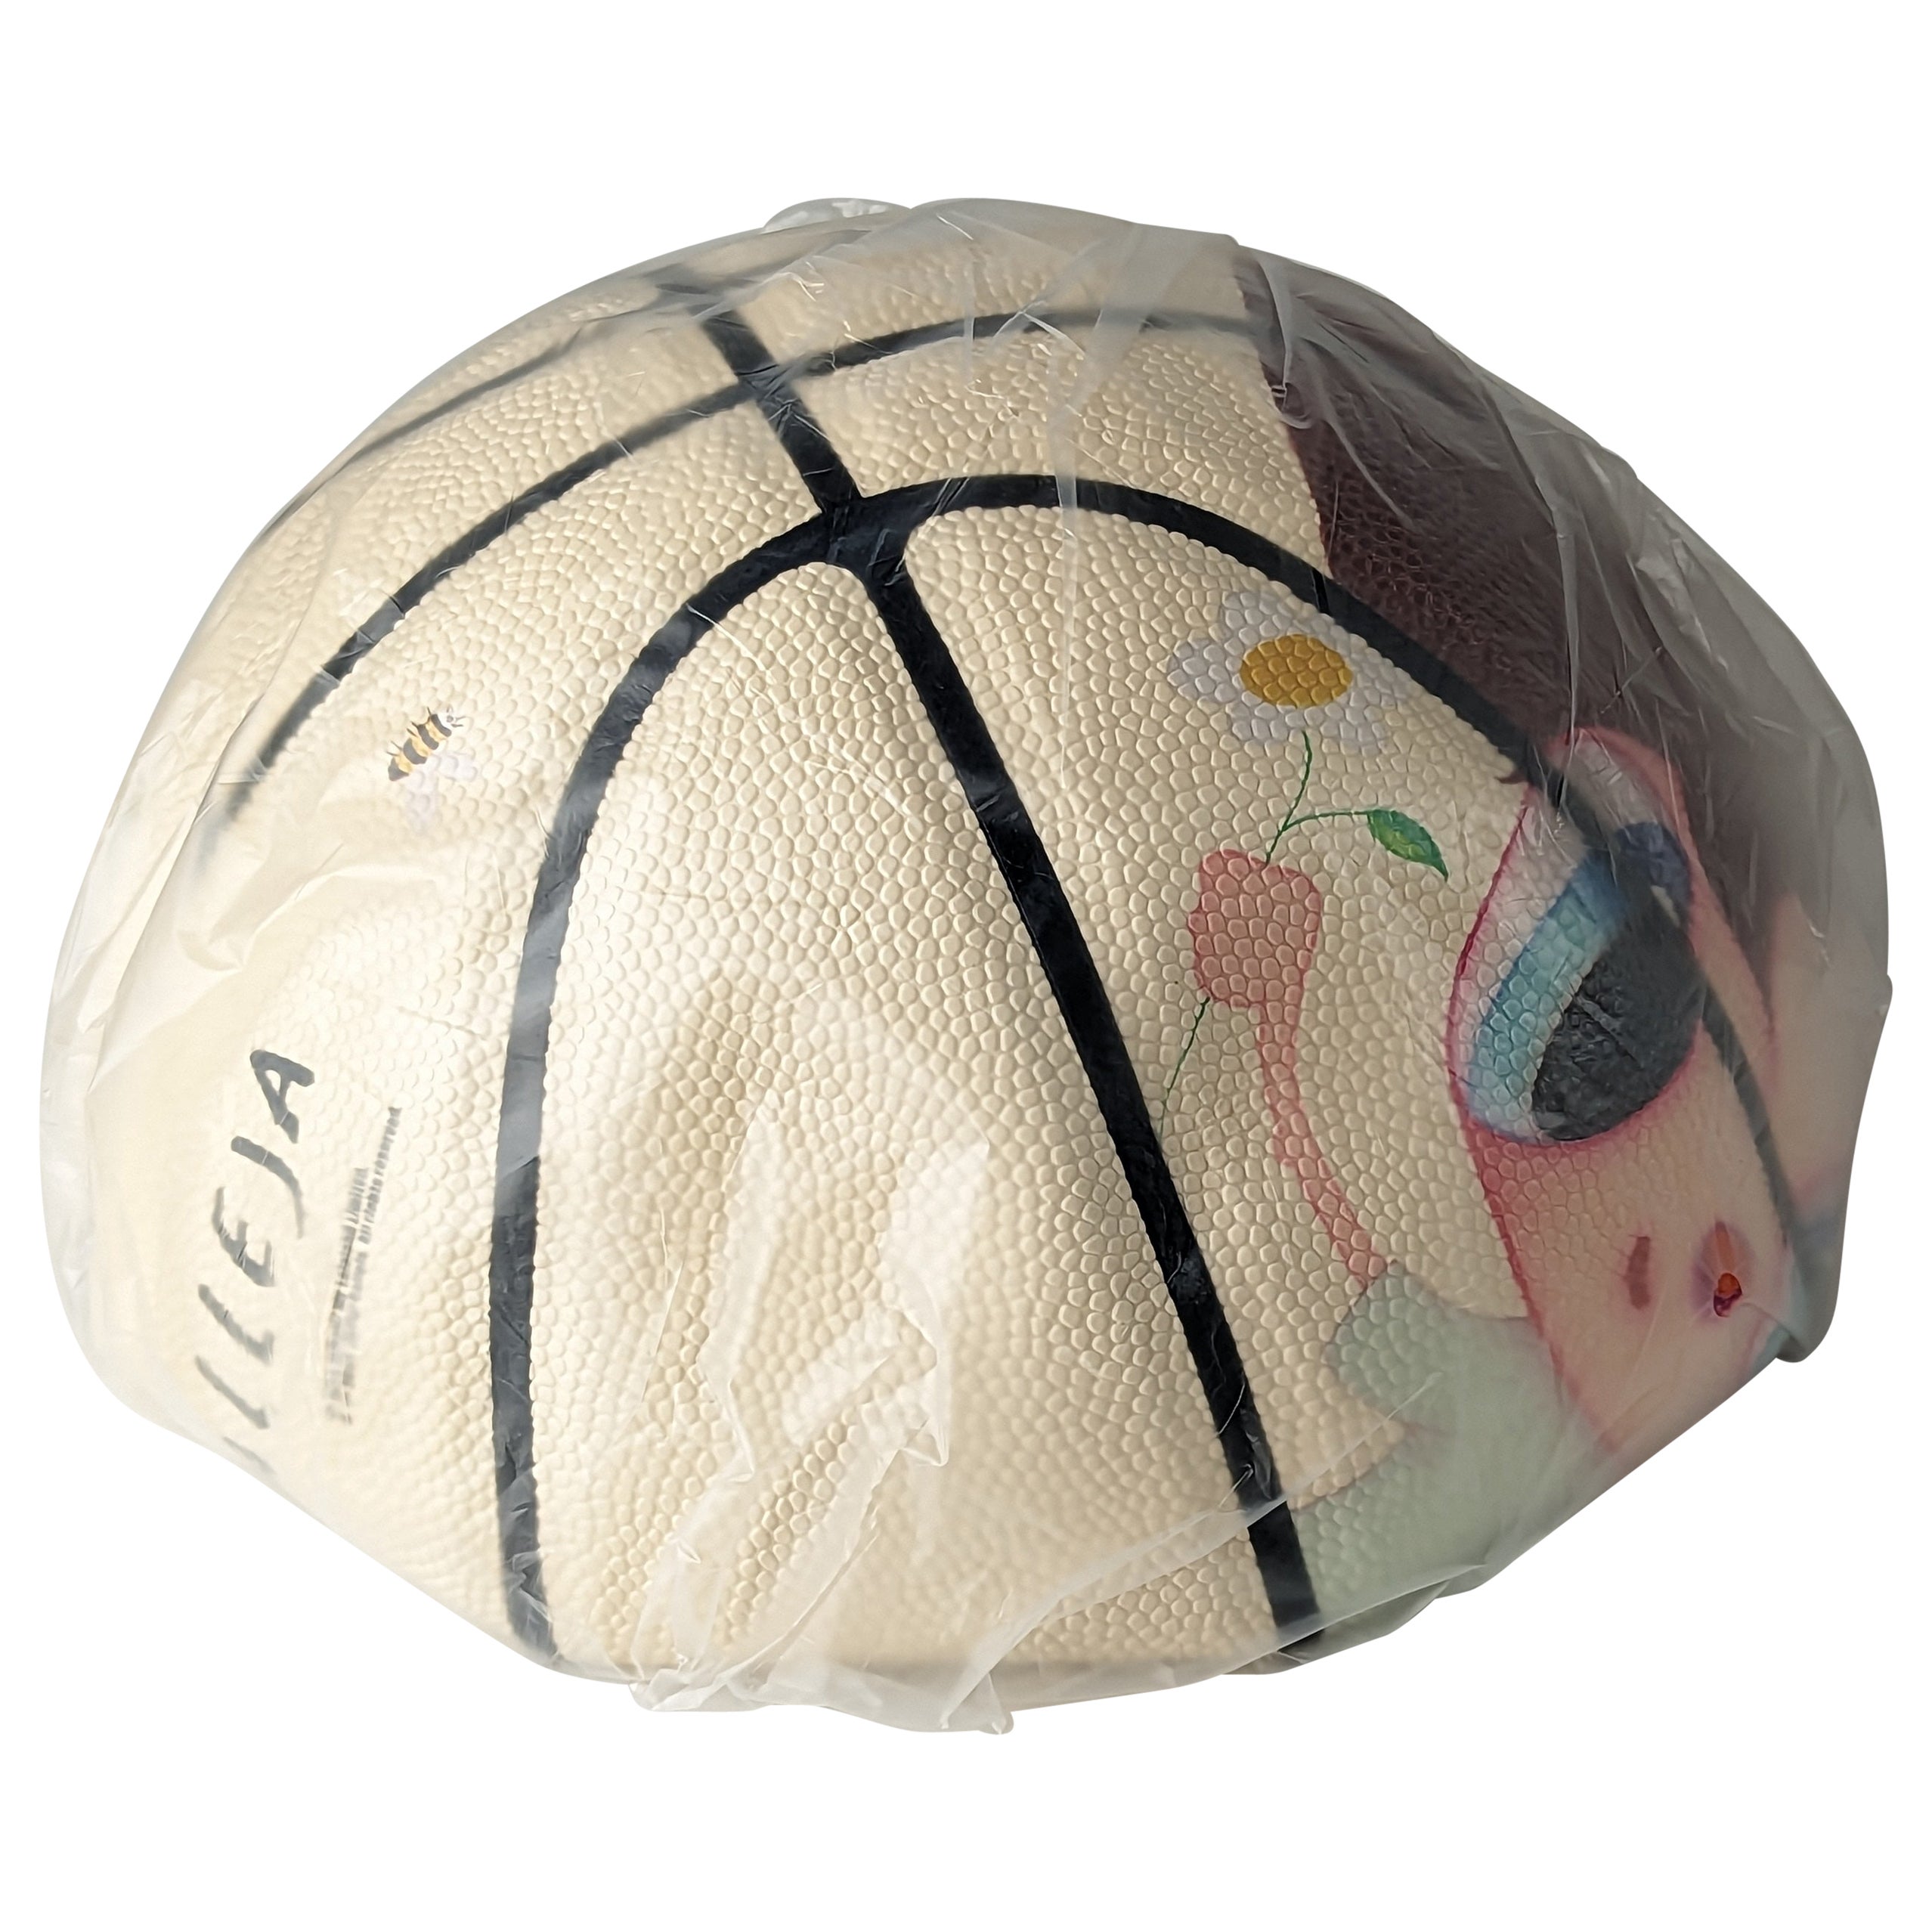 Ball de basket-ball artistique de Javier Calleja x Mira Mikati, édition limitée Malaga 2023